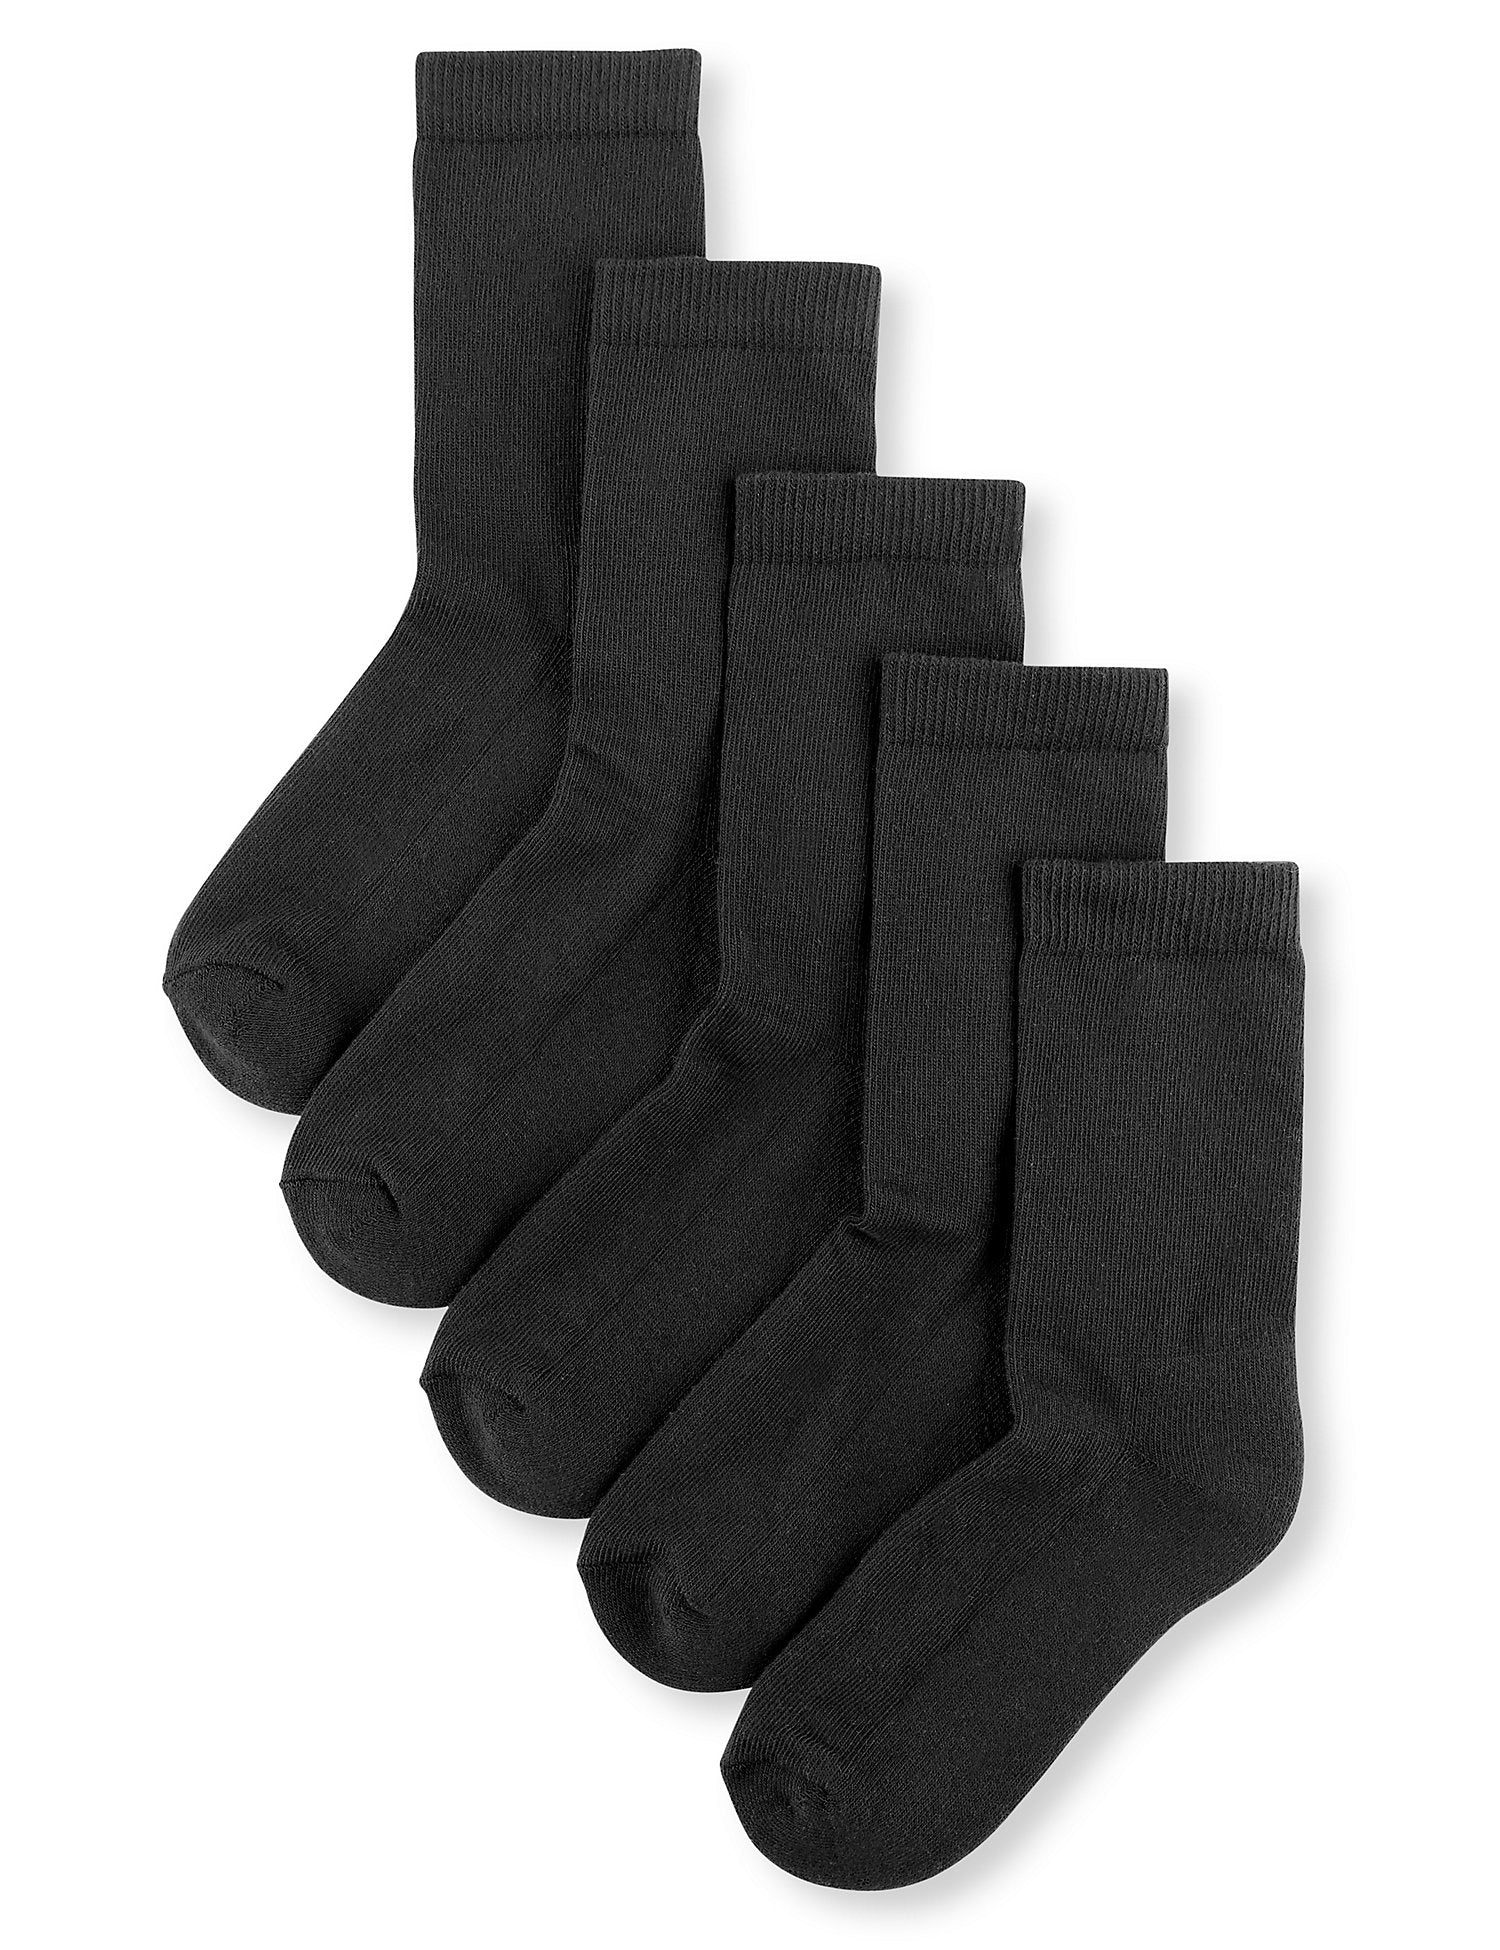 5 Pairs of Sports Socks